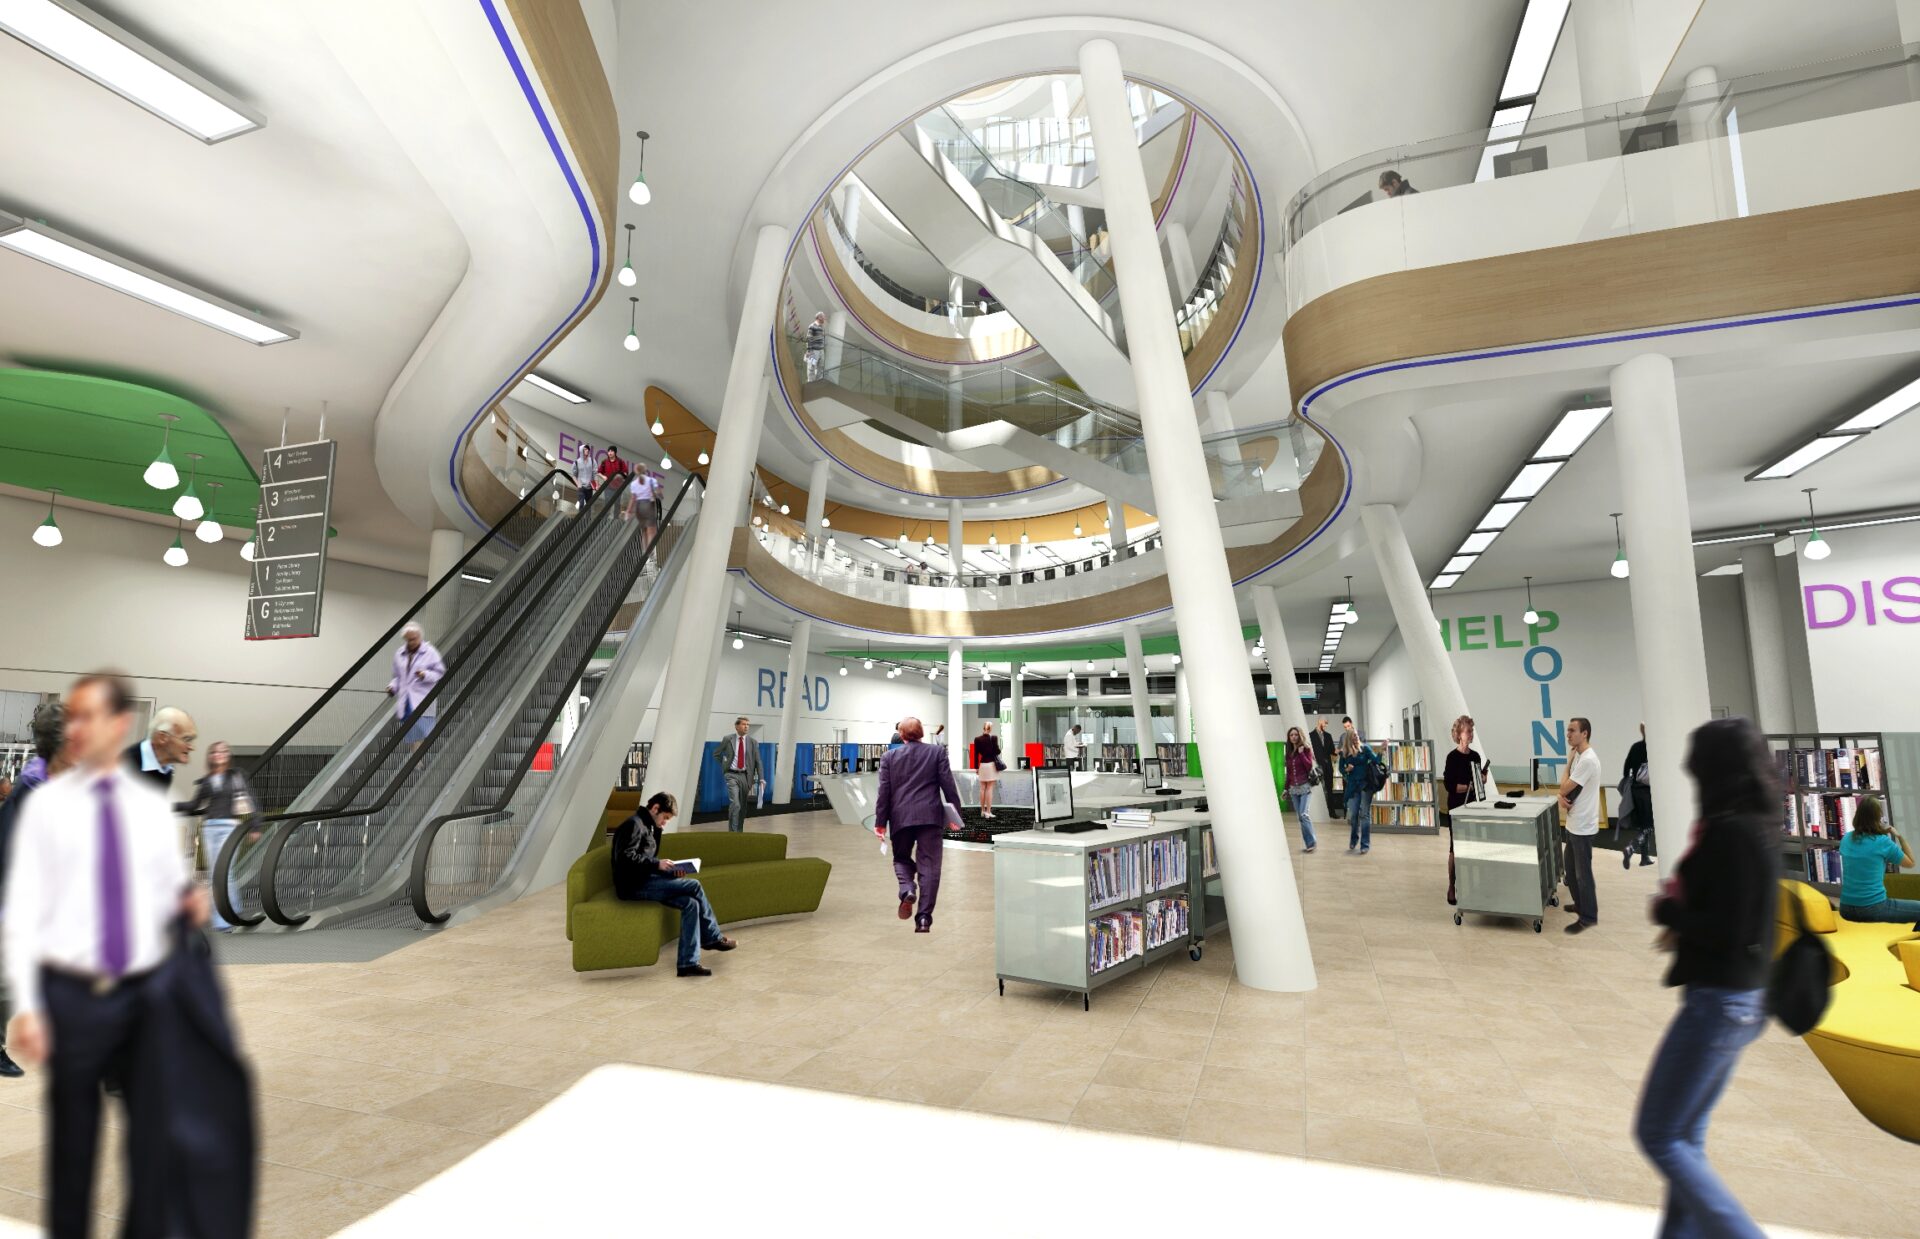 Liverpool Central Library - Entrance Atrium